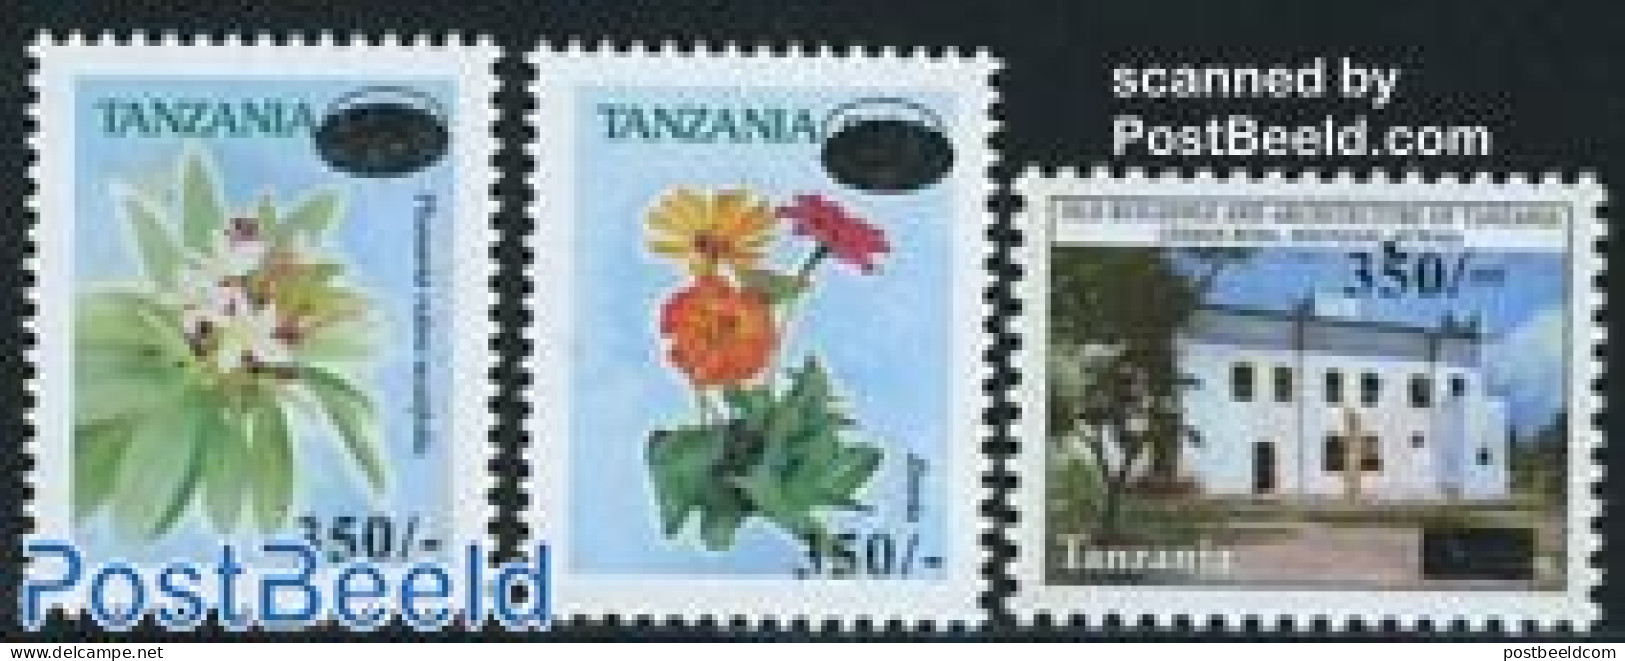 Tanzania 2007 Overprints 3v, Mint NH, Nature - Flowers & Plants - Tanzania (1964-...)